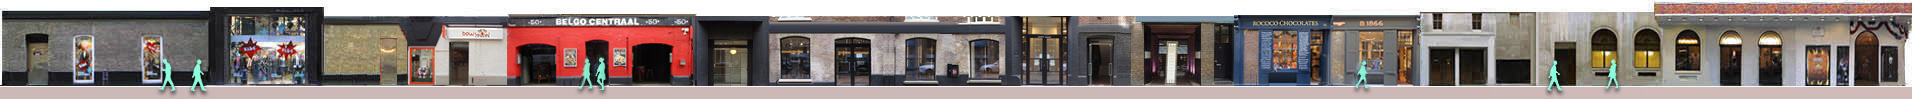 Earlham Street shops and restaurants: Bow Wow, Belgo, Rococo chocolates, B1866 Brooks saddles, Cambridge Theatre